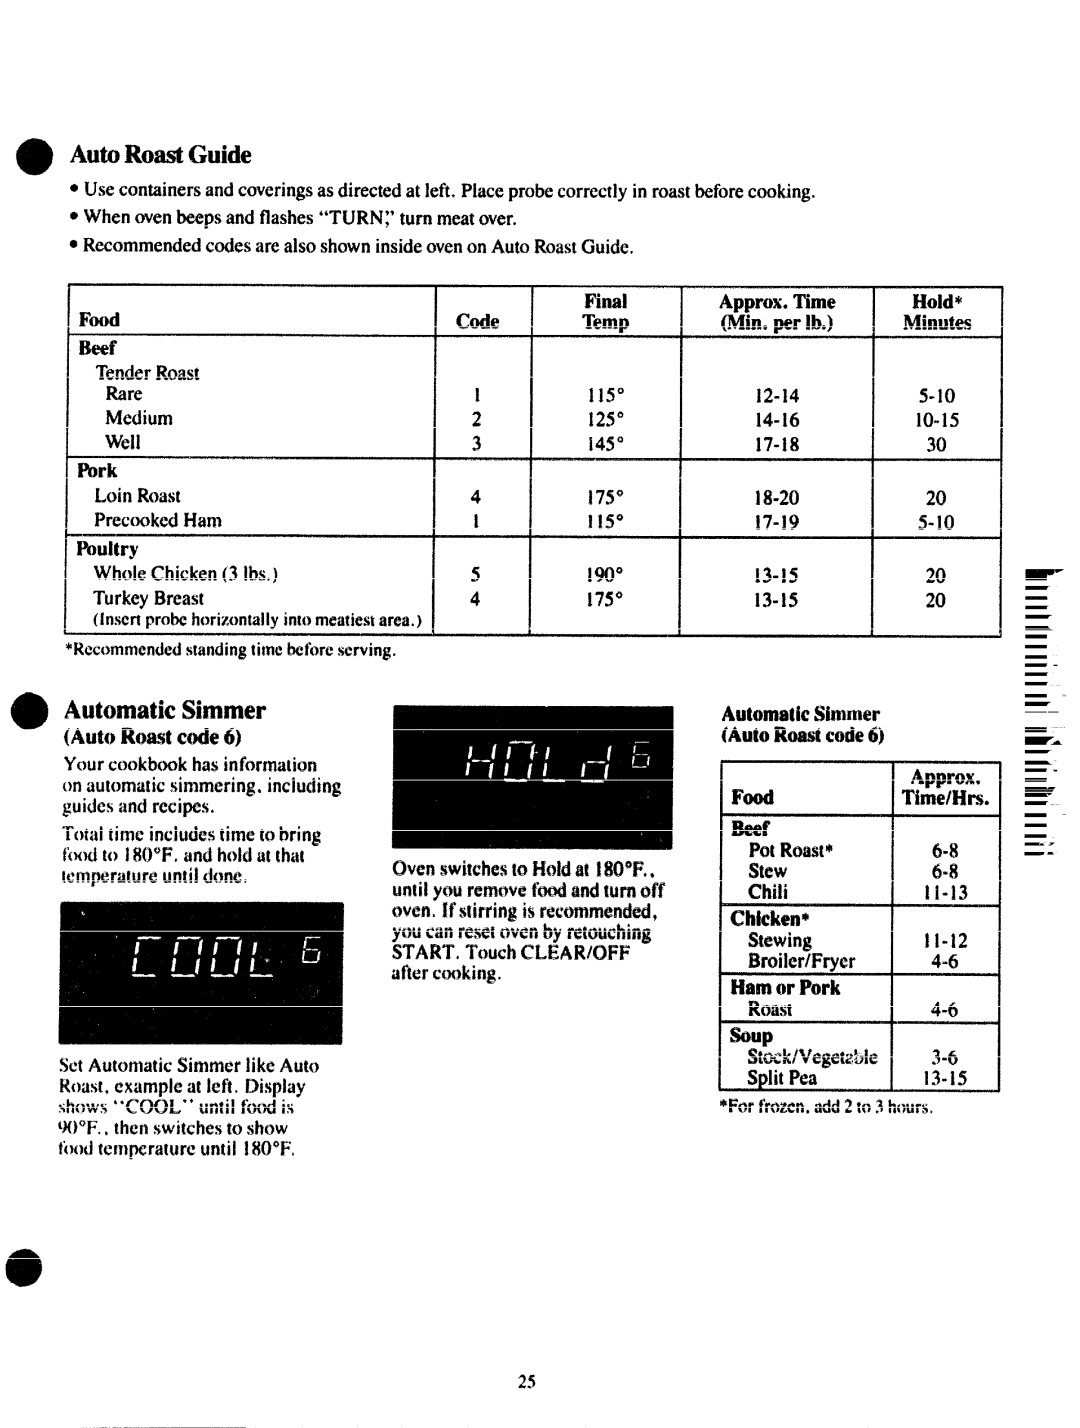 GE JVM172G manual 10-15, AutoRoastGuide, Chicken 